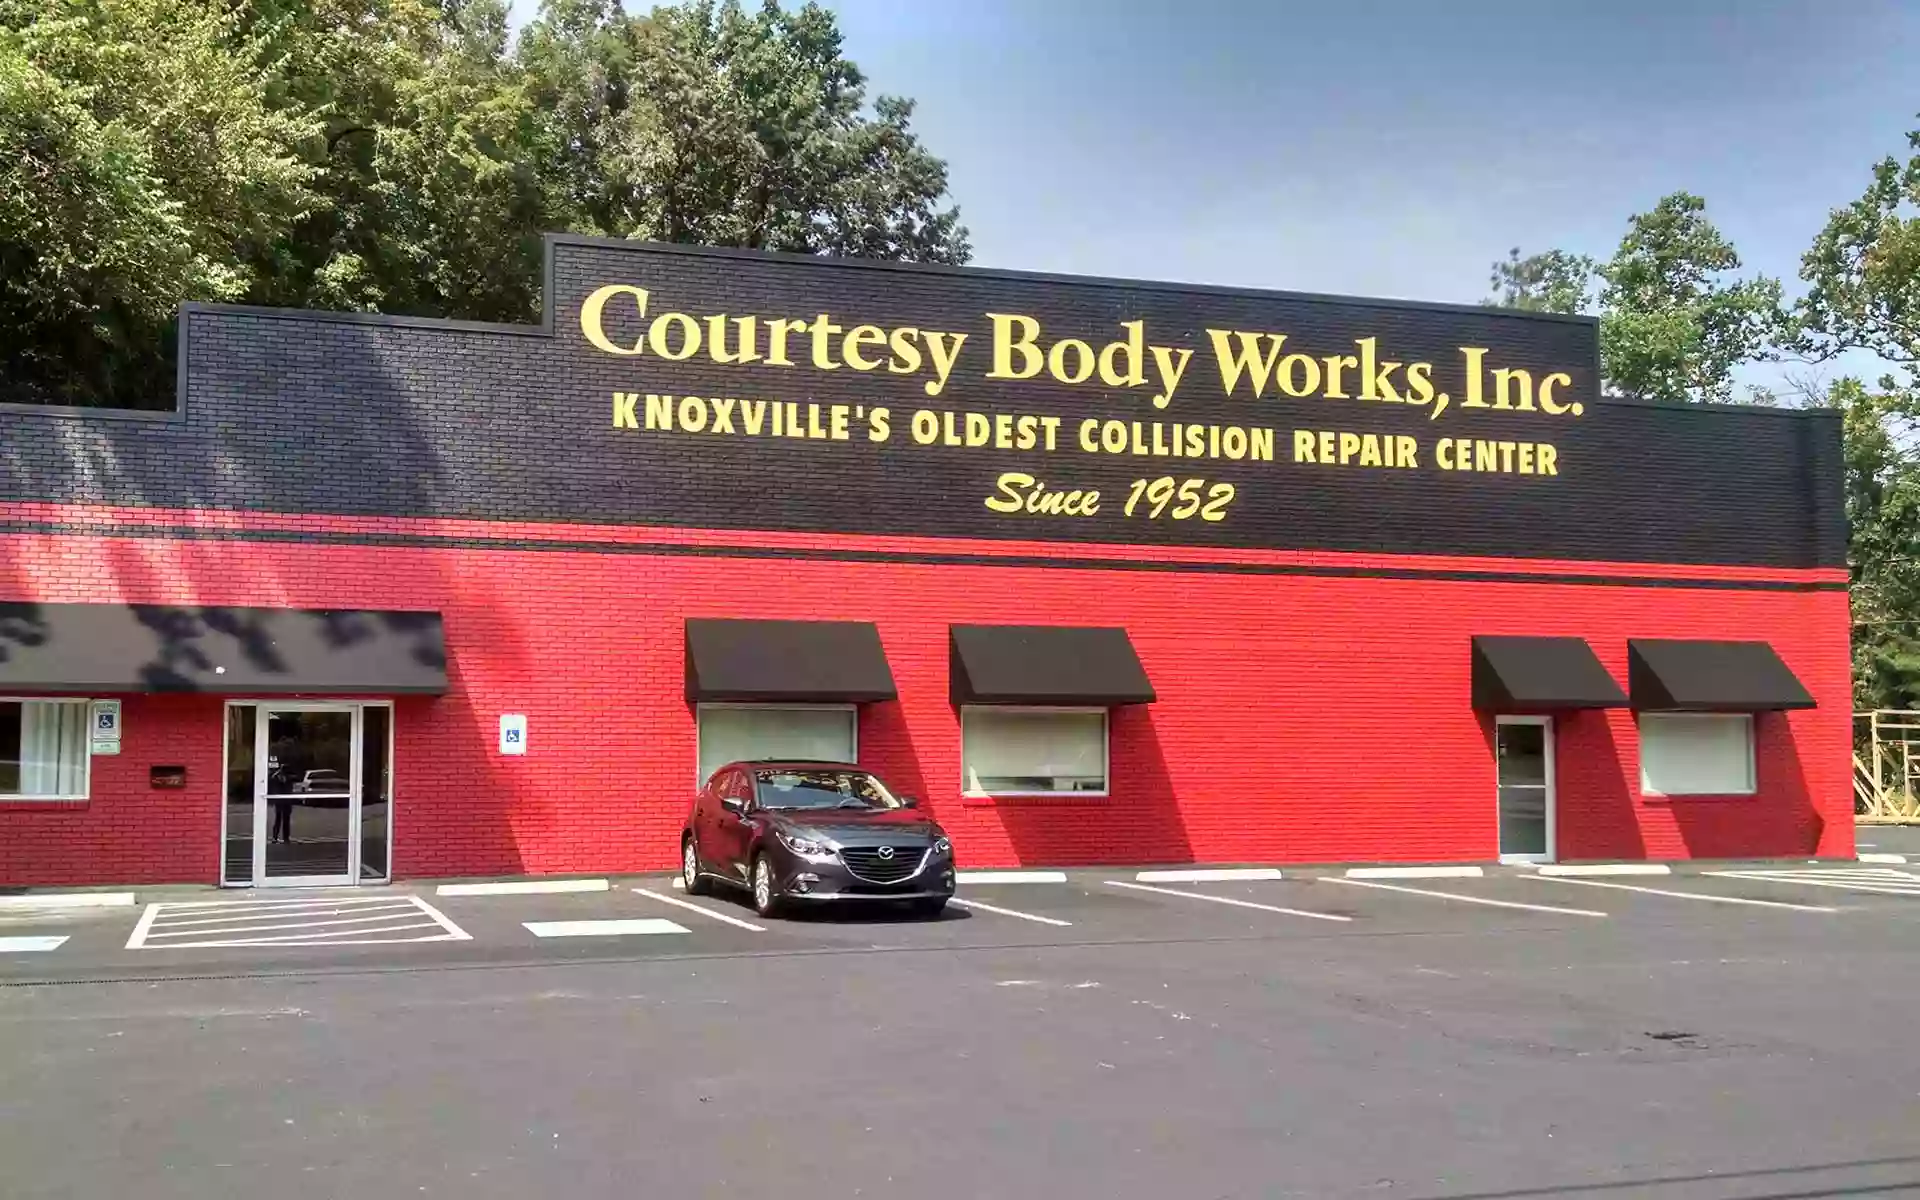 Courtesy Body Works, Inc.